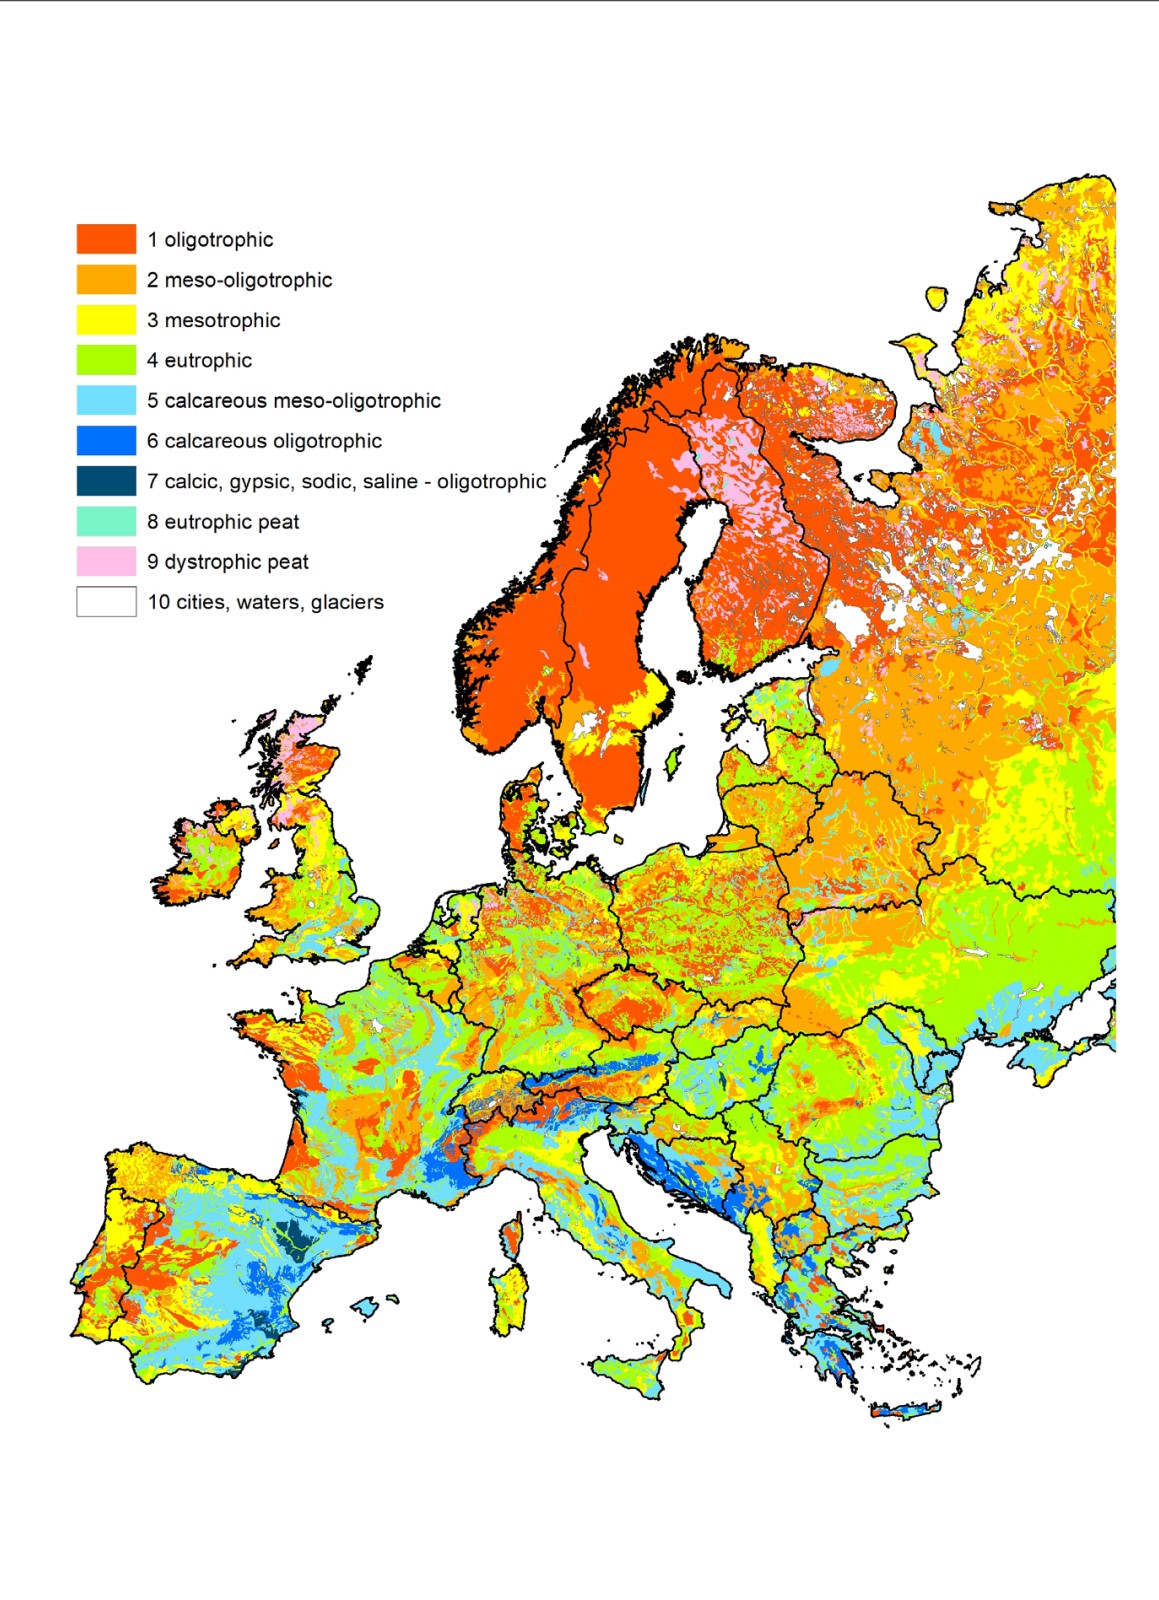 Nährstoffstatus naturnaher Böden in Europa